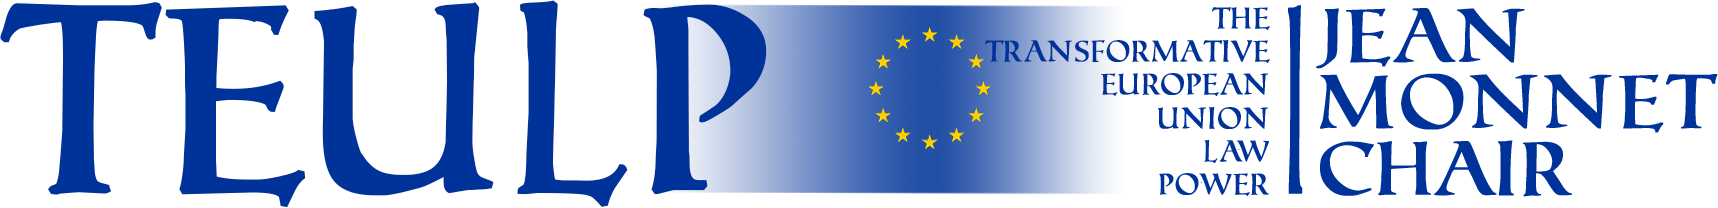 The Transformative European Union Law Power – Jean Monnet Chair Logo